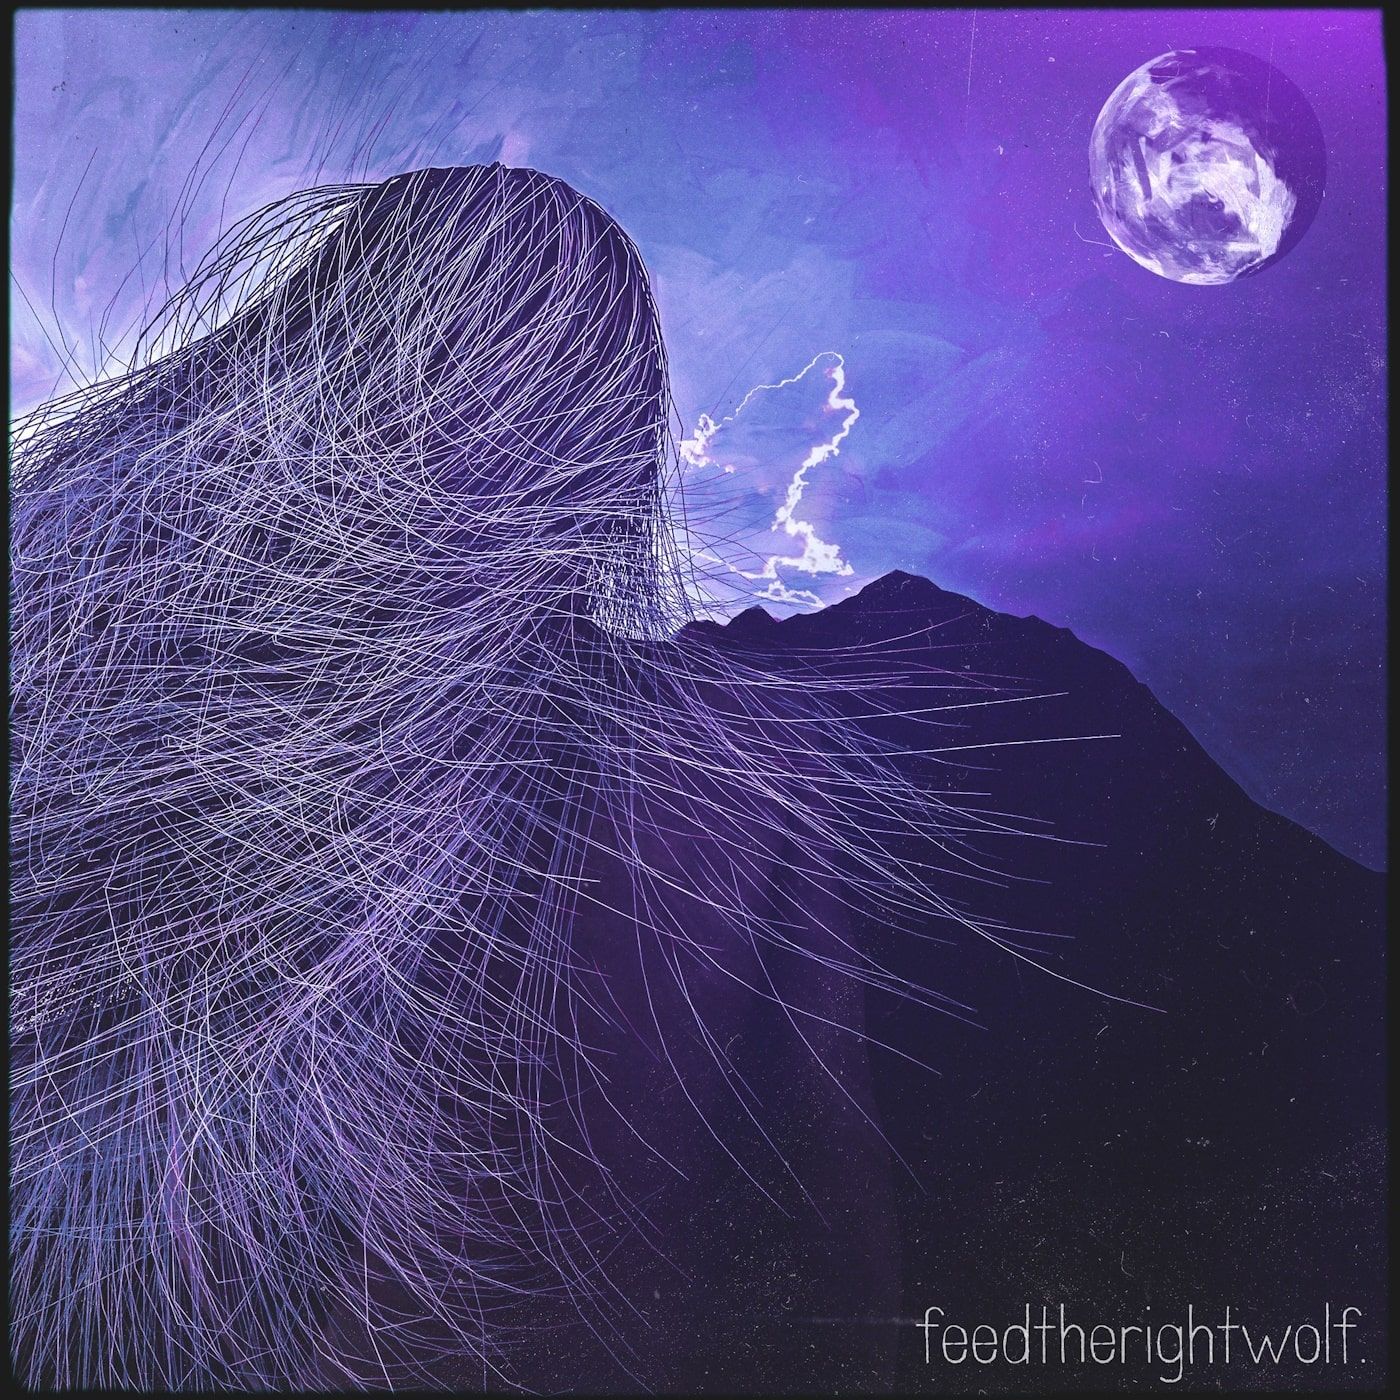 feedtherightwolf